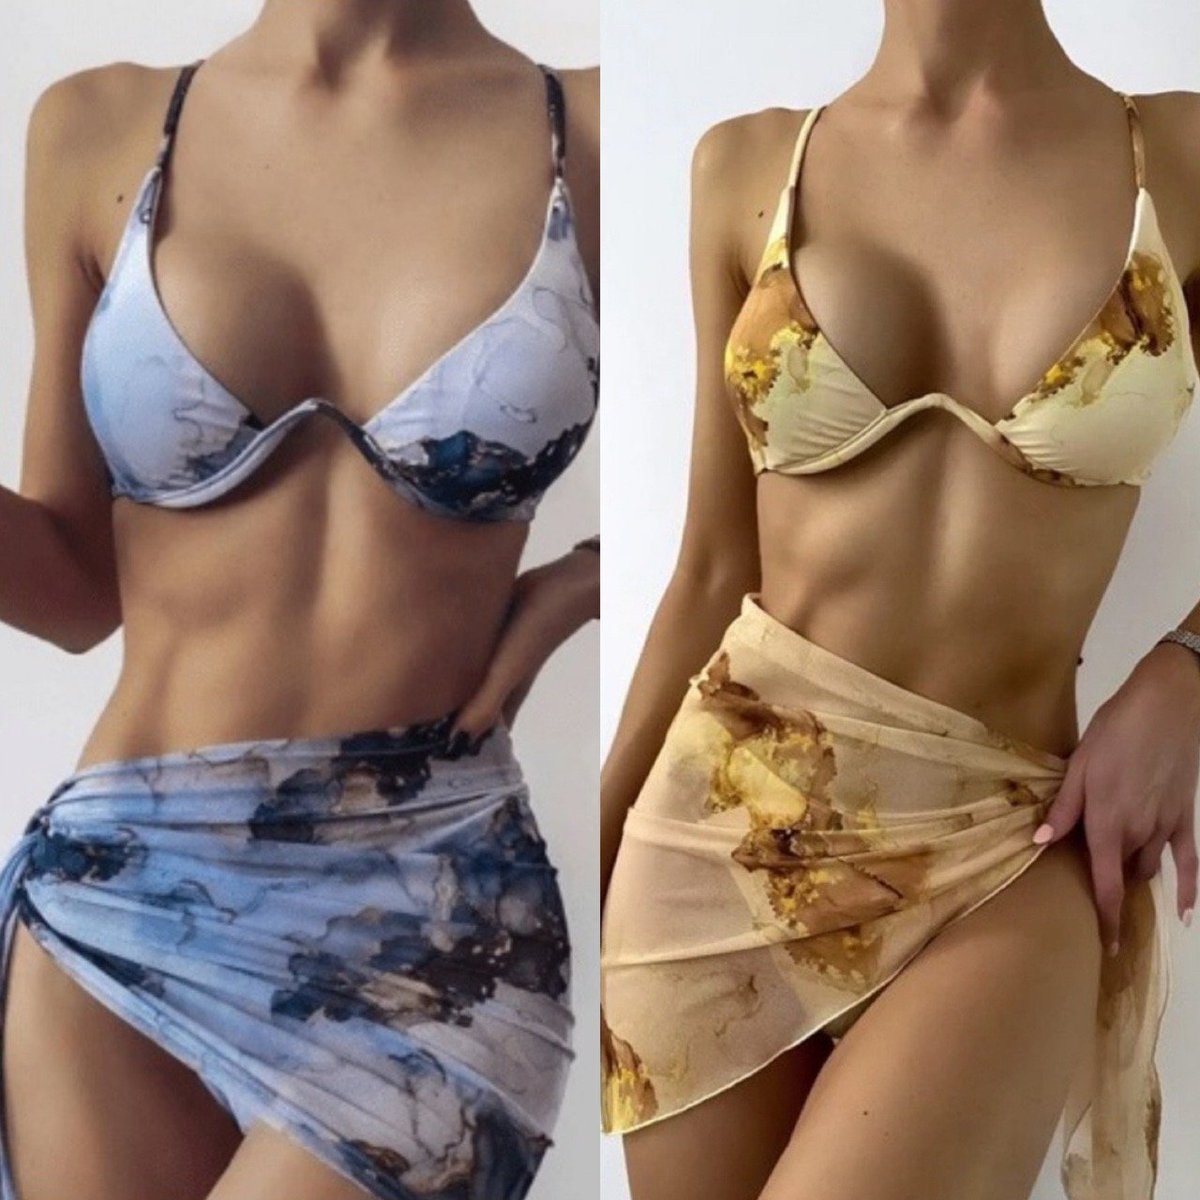 Push Up Bikini with Cover Up
Click to shop:  invol.co/clhrdh8

#LazadaAffiliate #beachwear #beachfashion #pushupbikini